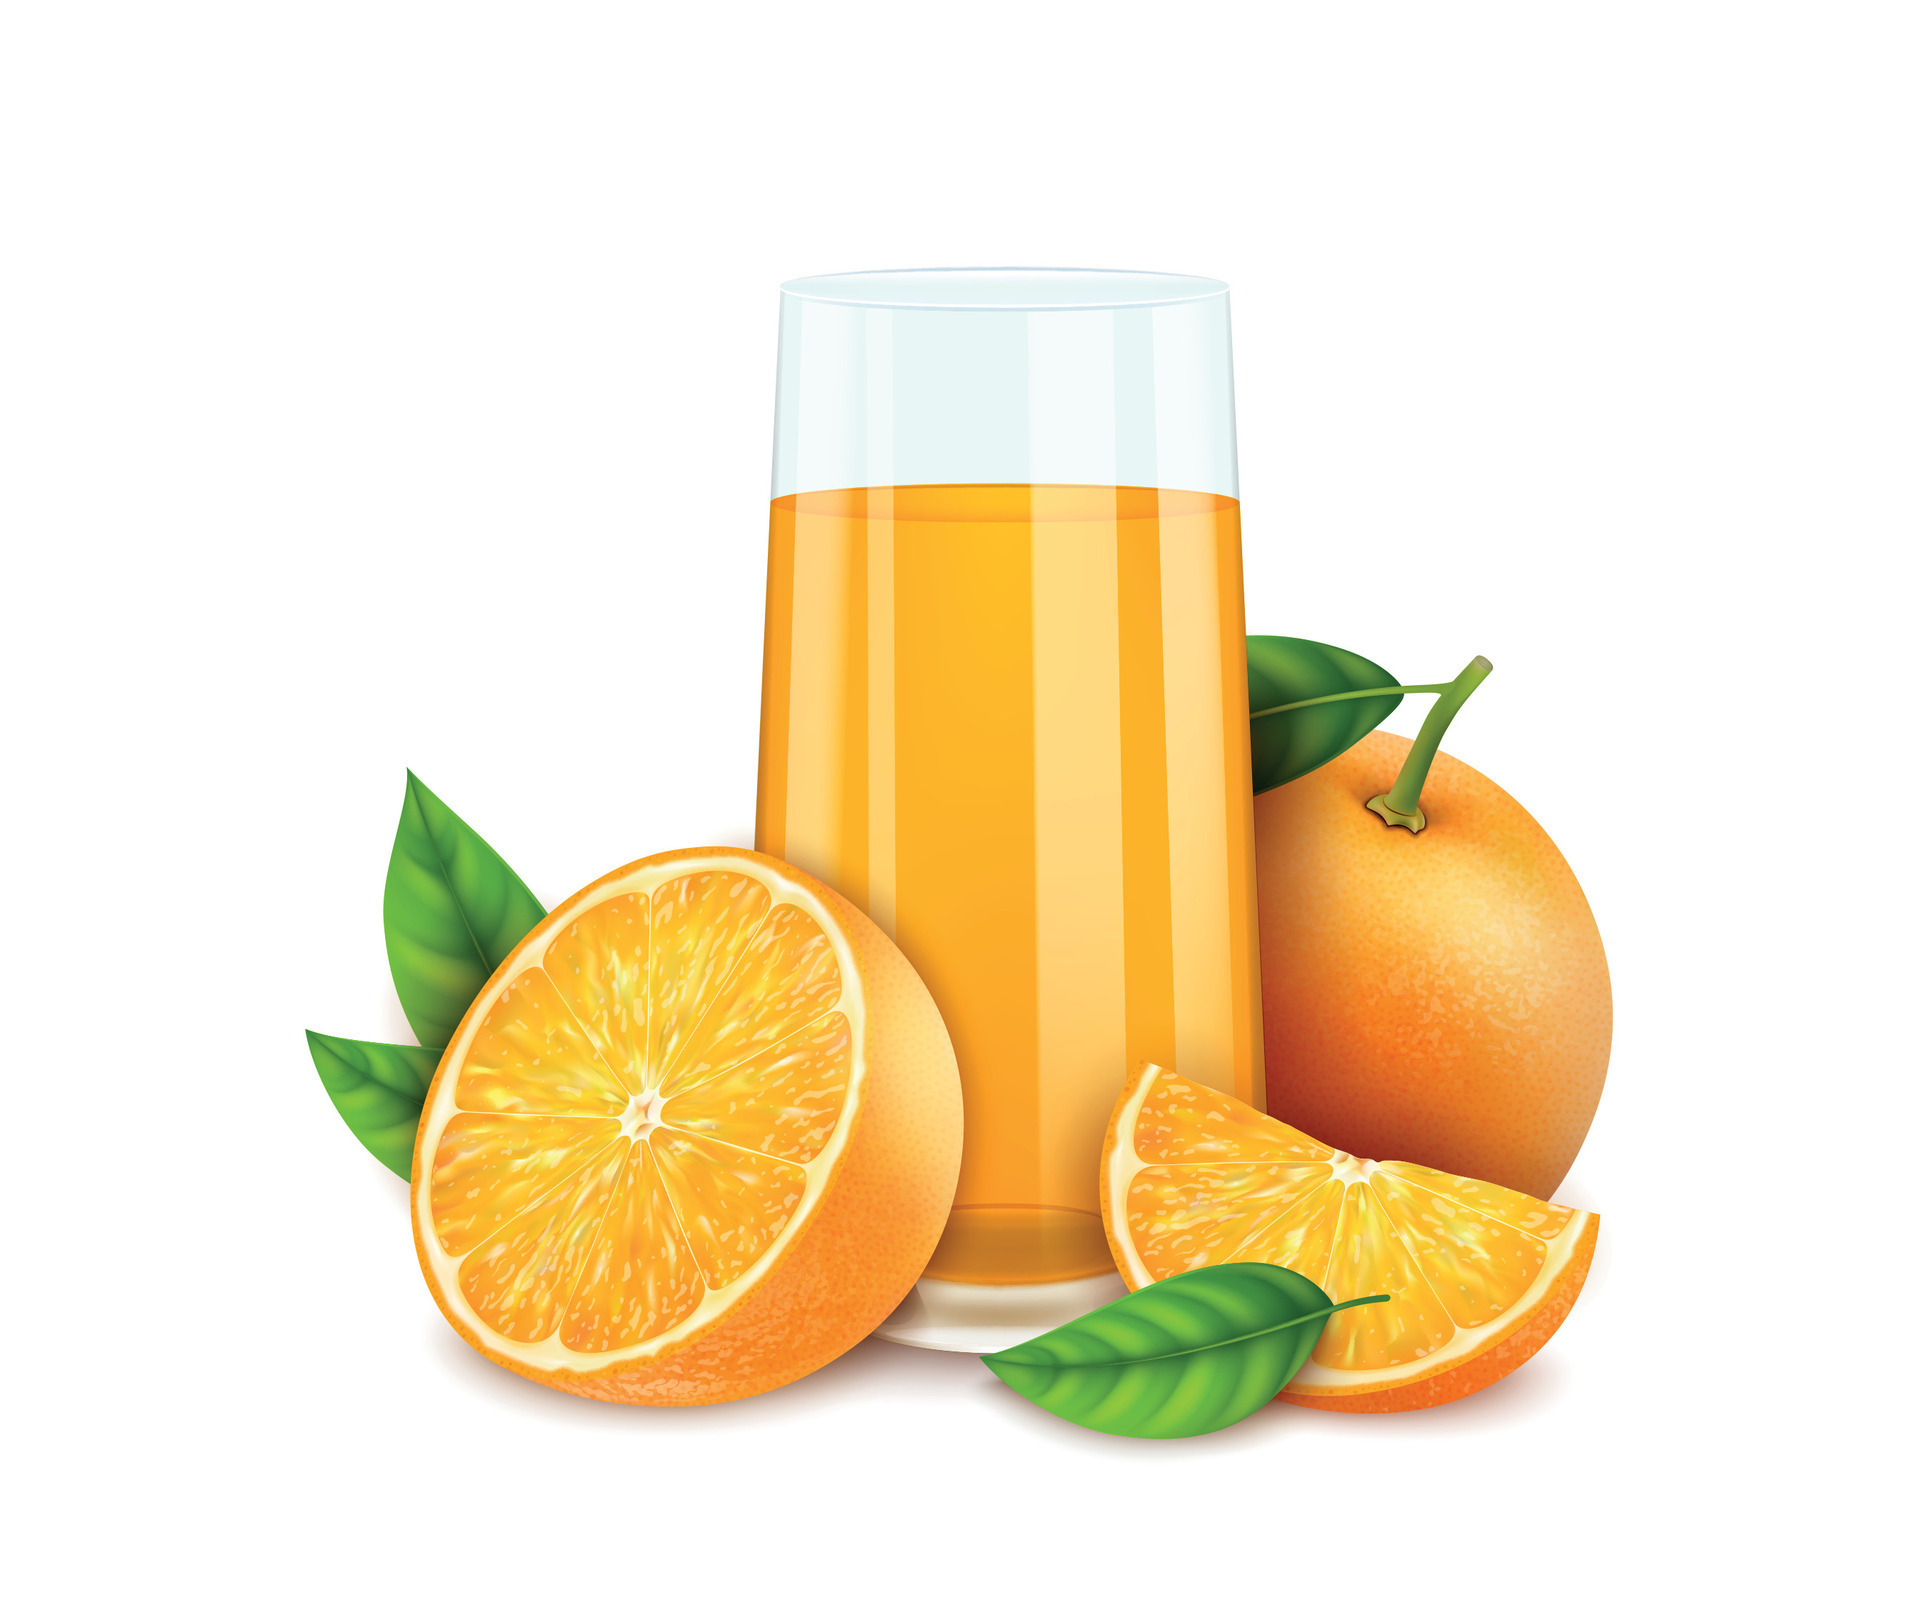 https://static.vecteezy.com/system/resources/previews/027/895/158/original/realistic-detailed-3d-orange-juice-glass-cup-with-citrus-fruit-vector.jpg